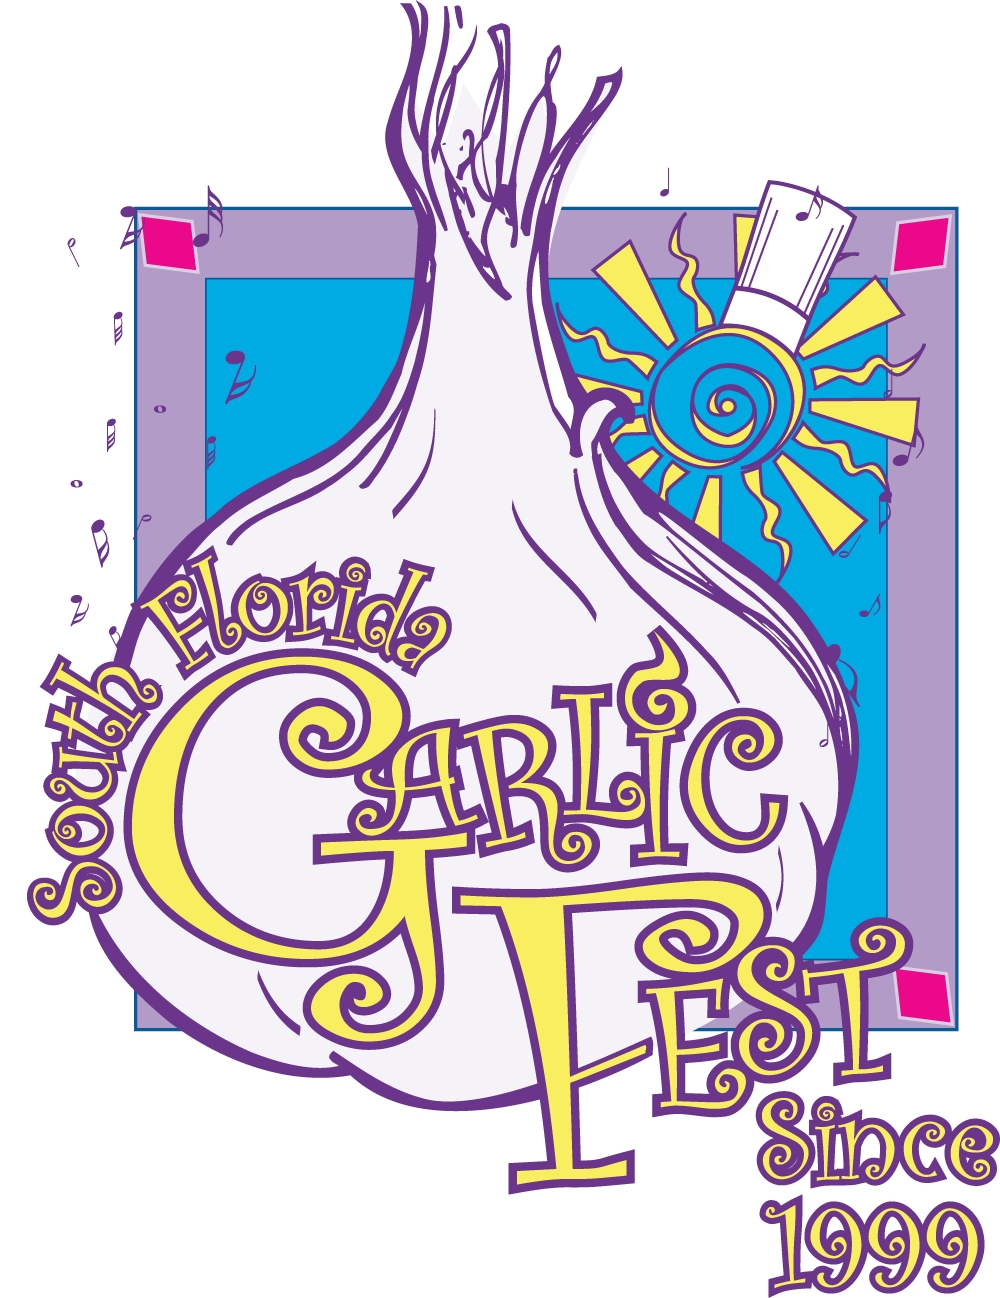 21st South Florida Garlic Fest cover image